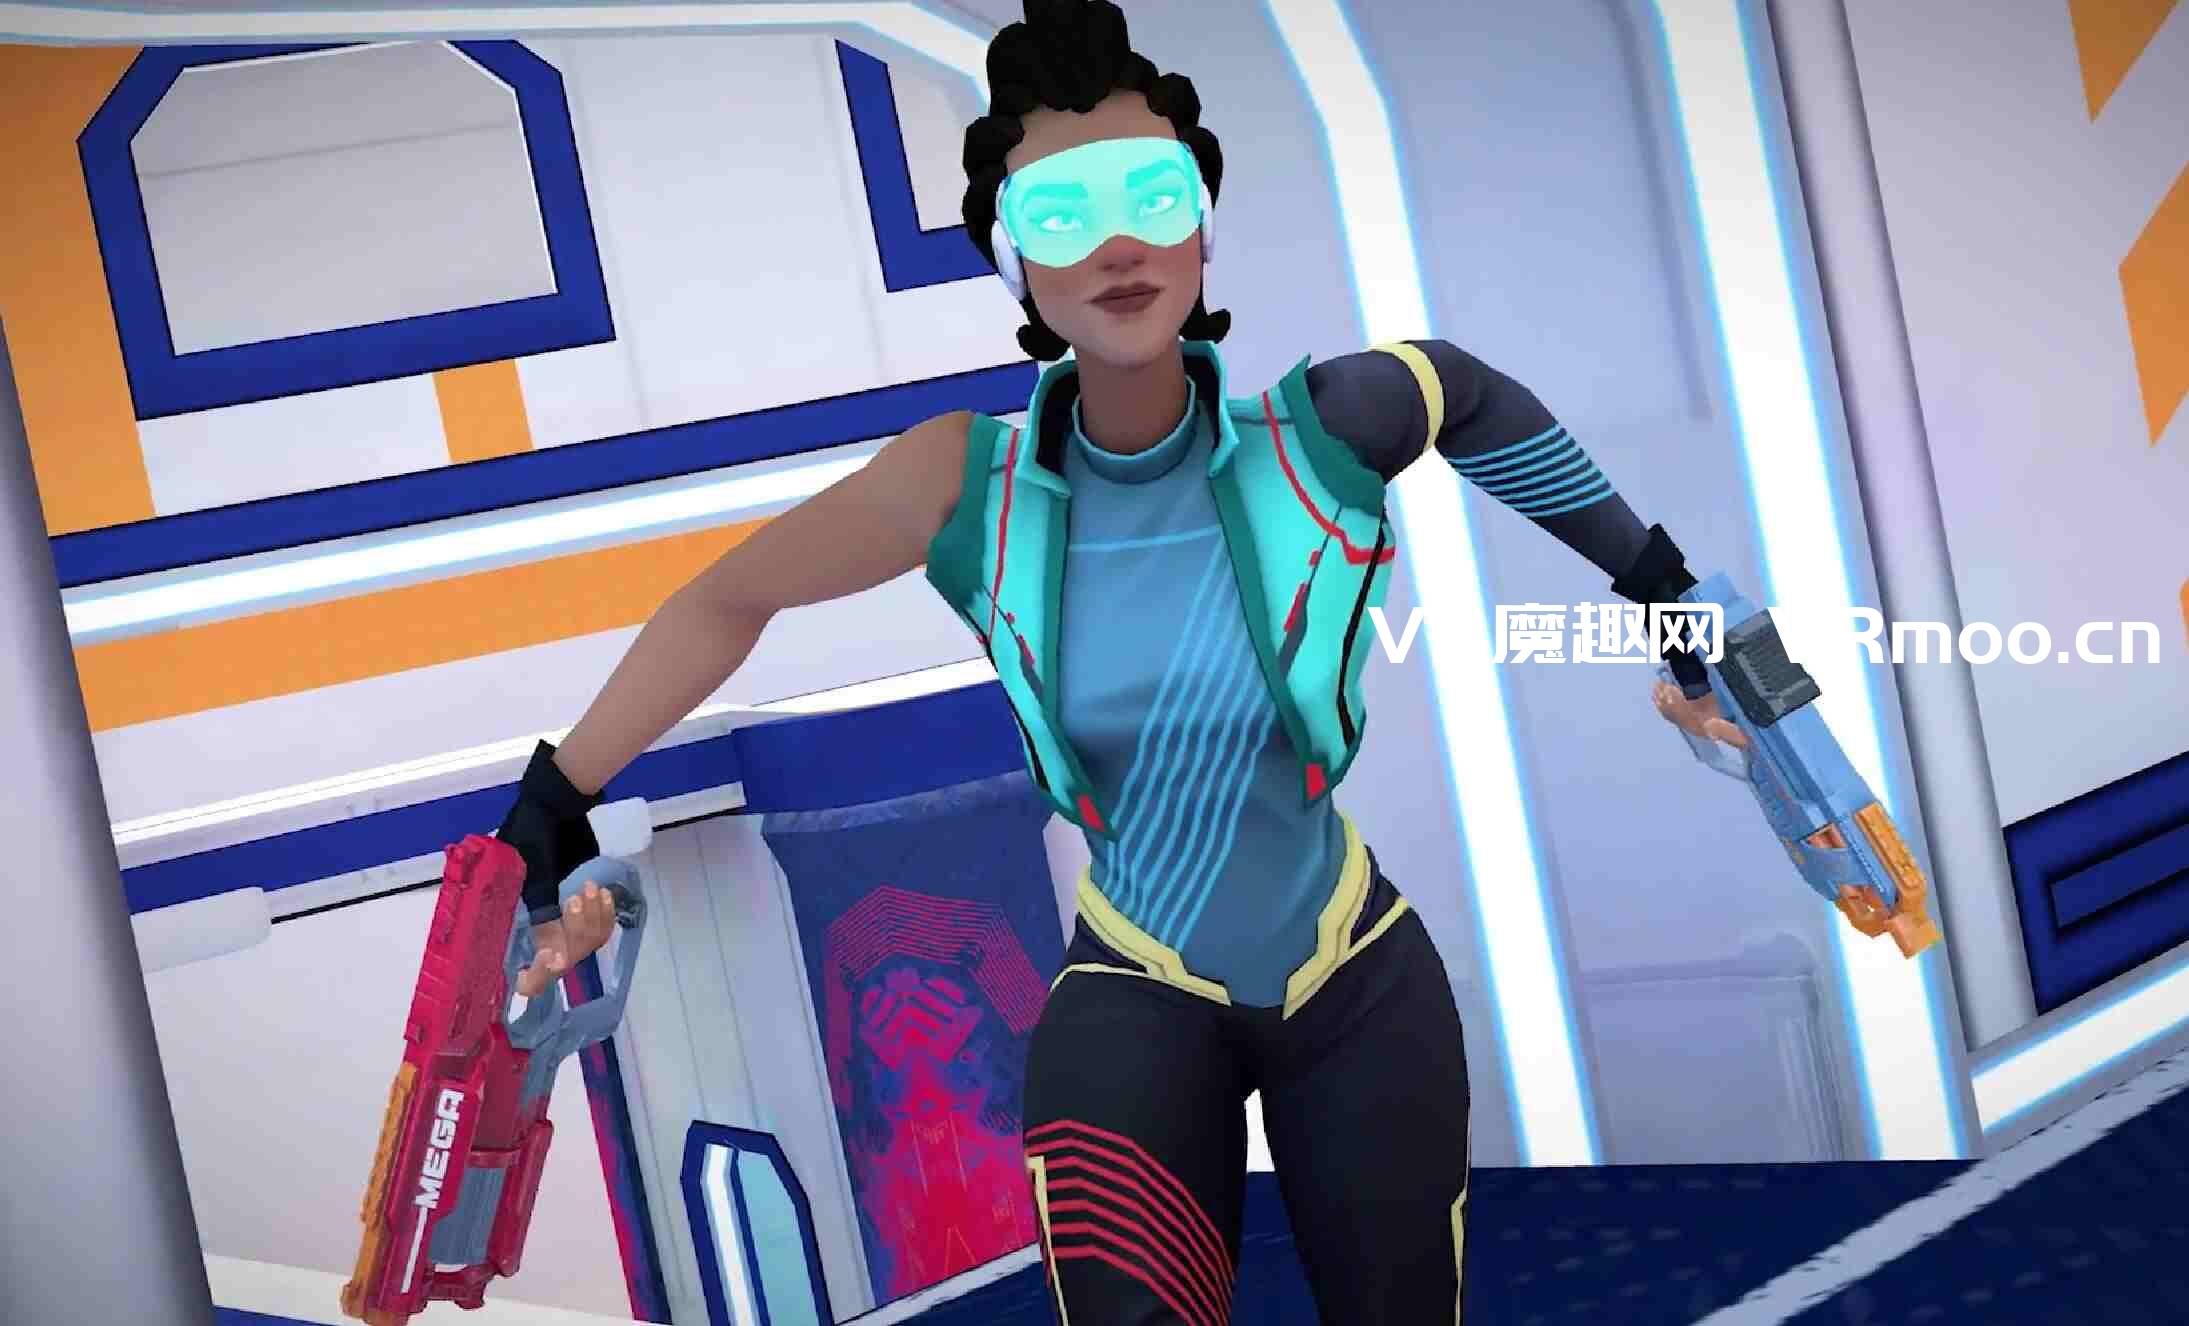 2333VR | Oculus Quest 游戏《竞技射击VR》Nerf VR